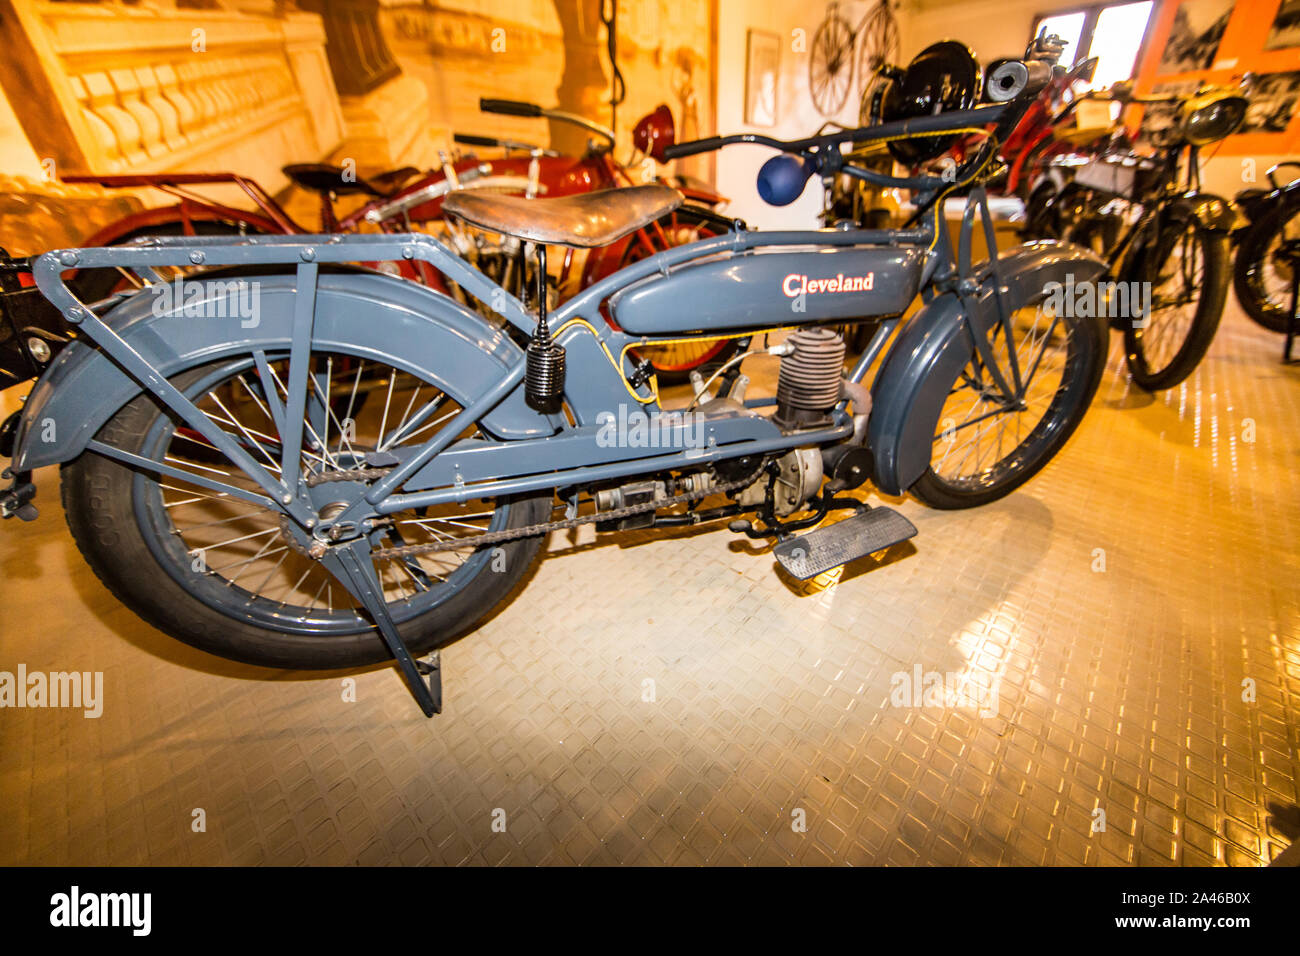 Marseille (France) Musée de la moto - Motorcycle museum : Cleveland (USA  Stock Photo - Alamy